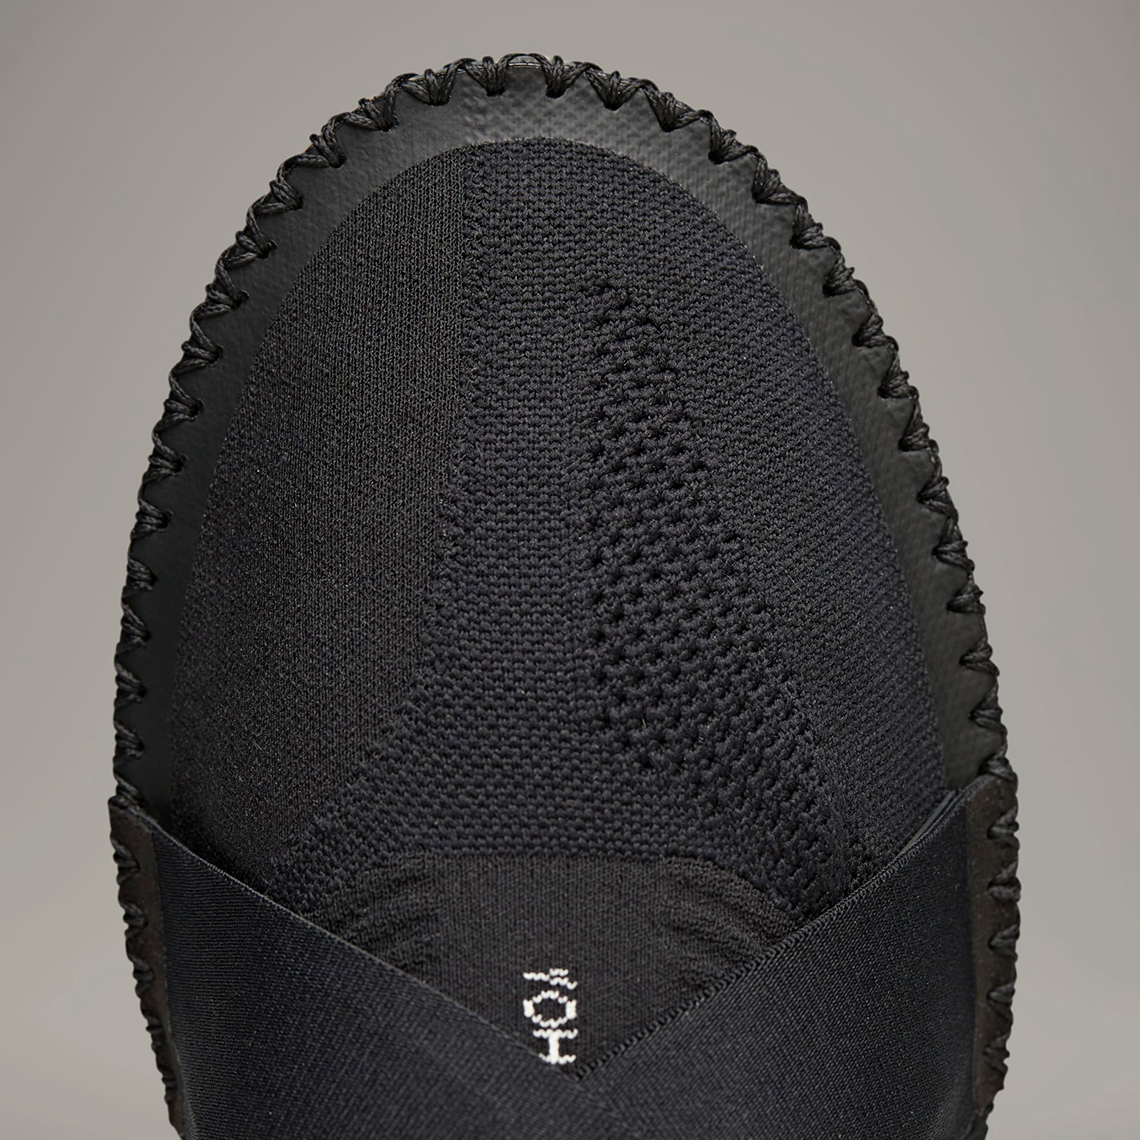 Adidas Y 3 Iogo Black Black Cream White Id6841 6